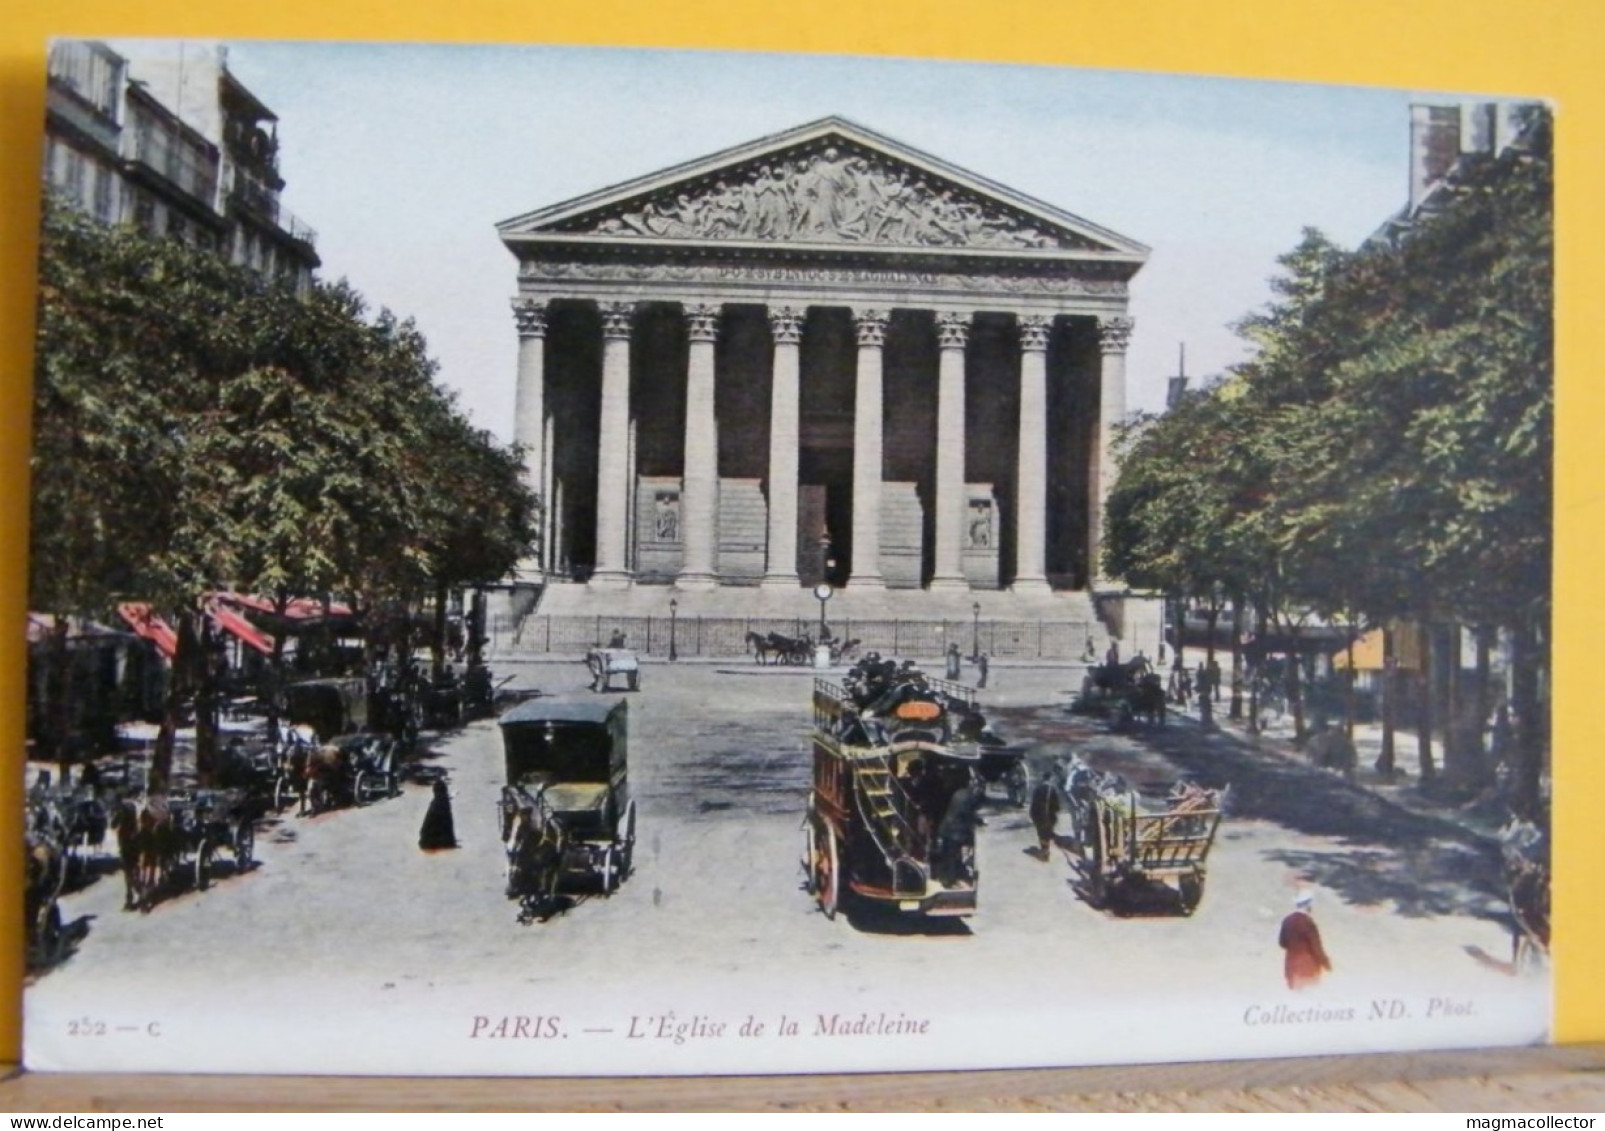 (P1) PARIGI / PARIS - L'EGLISE DE LA MADELEINE - 252-C - NON VIAGGIATA 1910/20ca - Kerken